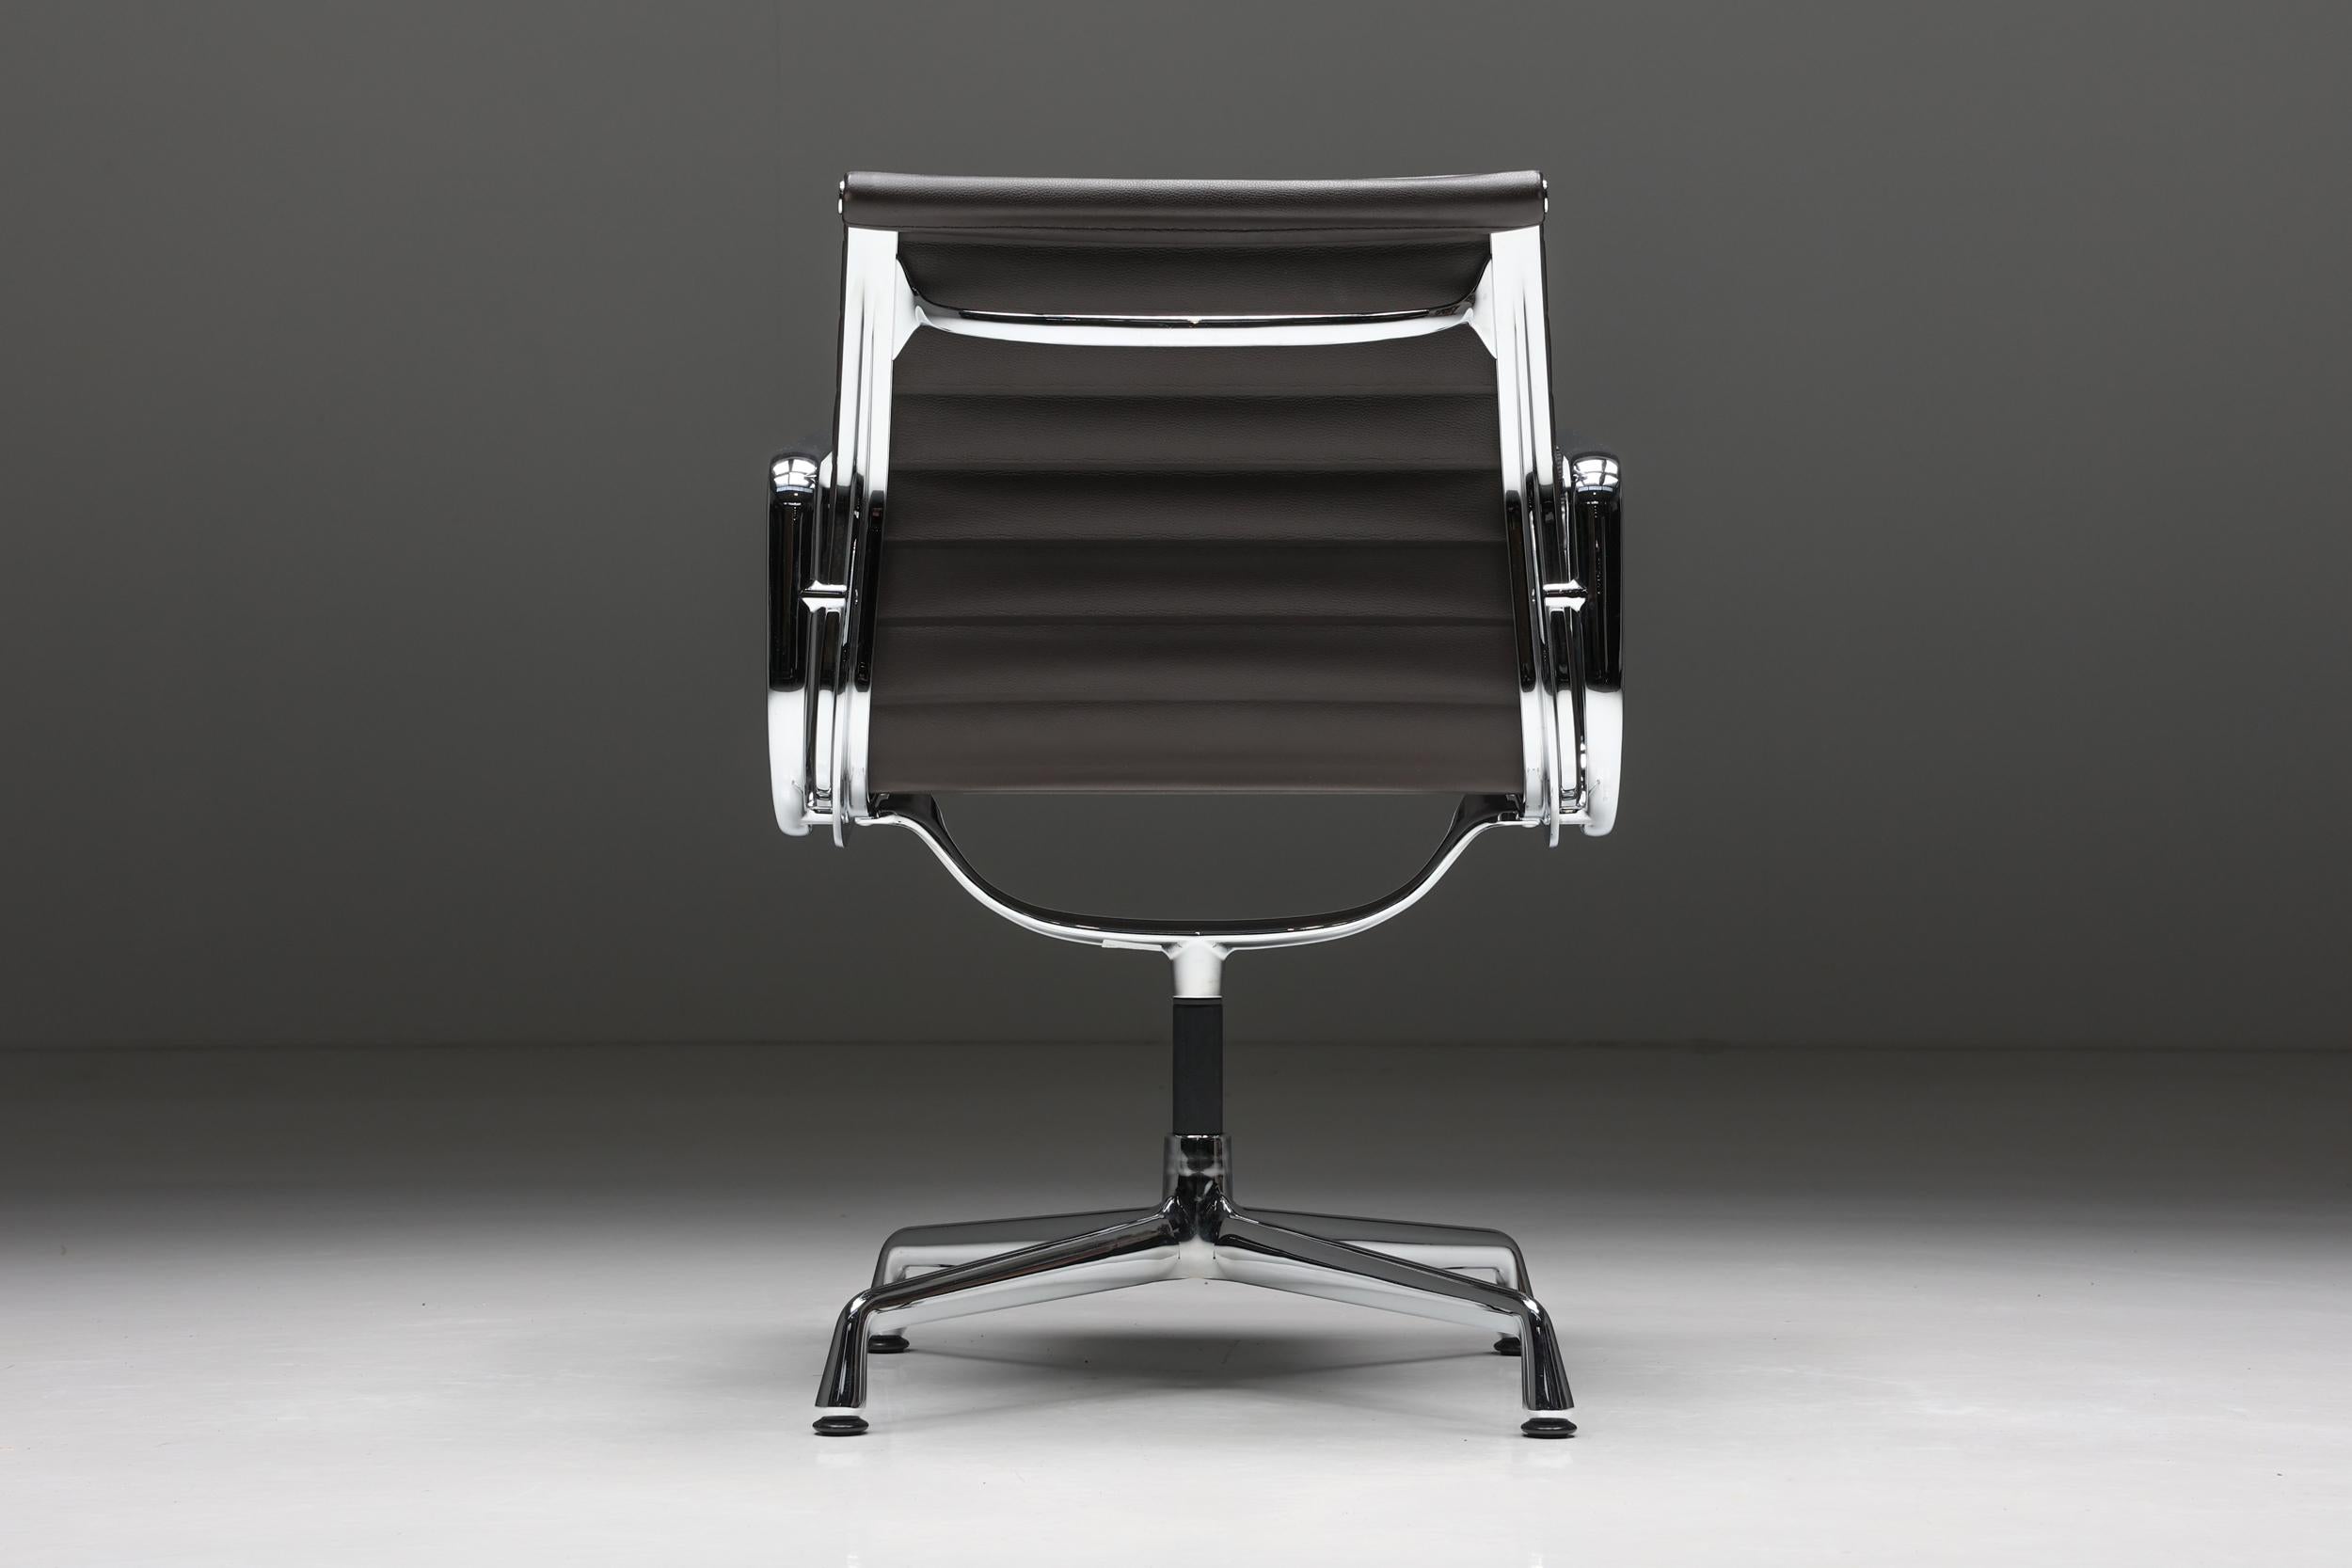 Chaise en aluminium ; Charles & Ray Eames ; Vitra ; 1958 ; Chaise de bureau ; Cuir ; Chrome ; Marron ; The Aluminum Group ; USA ; Eames ; 

Chaise en aluminium conçue par Charles & Ray Eames et fabriquée par Vitra en 1958. Chaise Eames de Vitra,